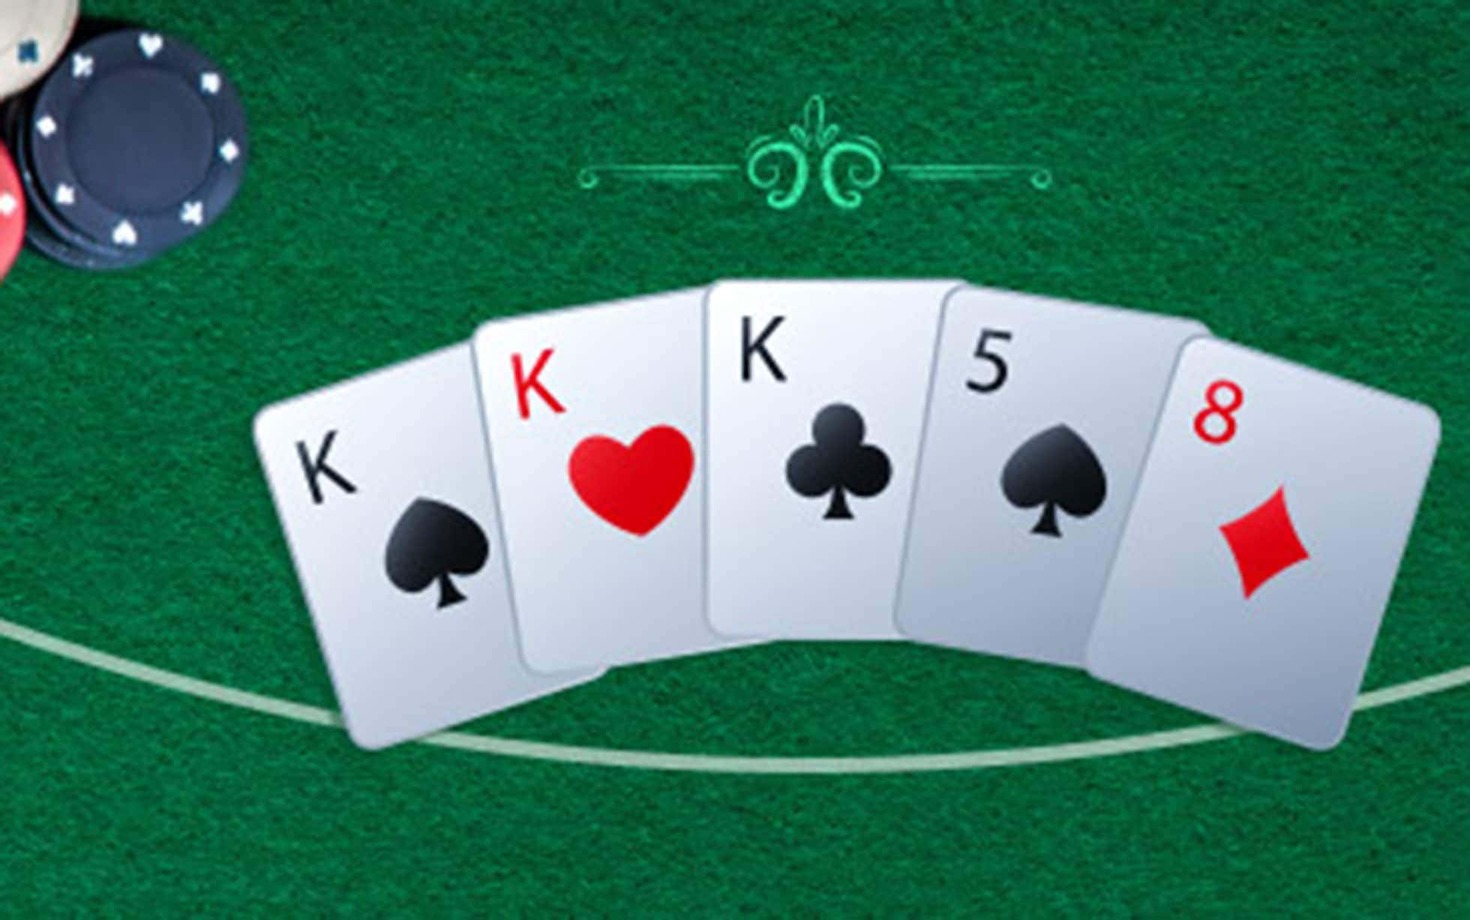 a five-card poker